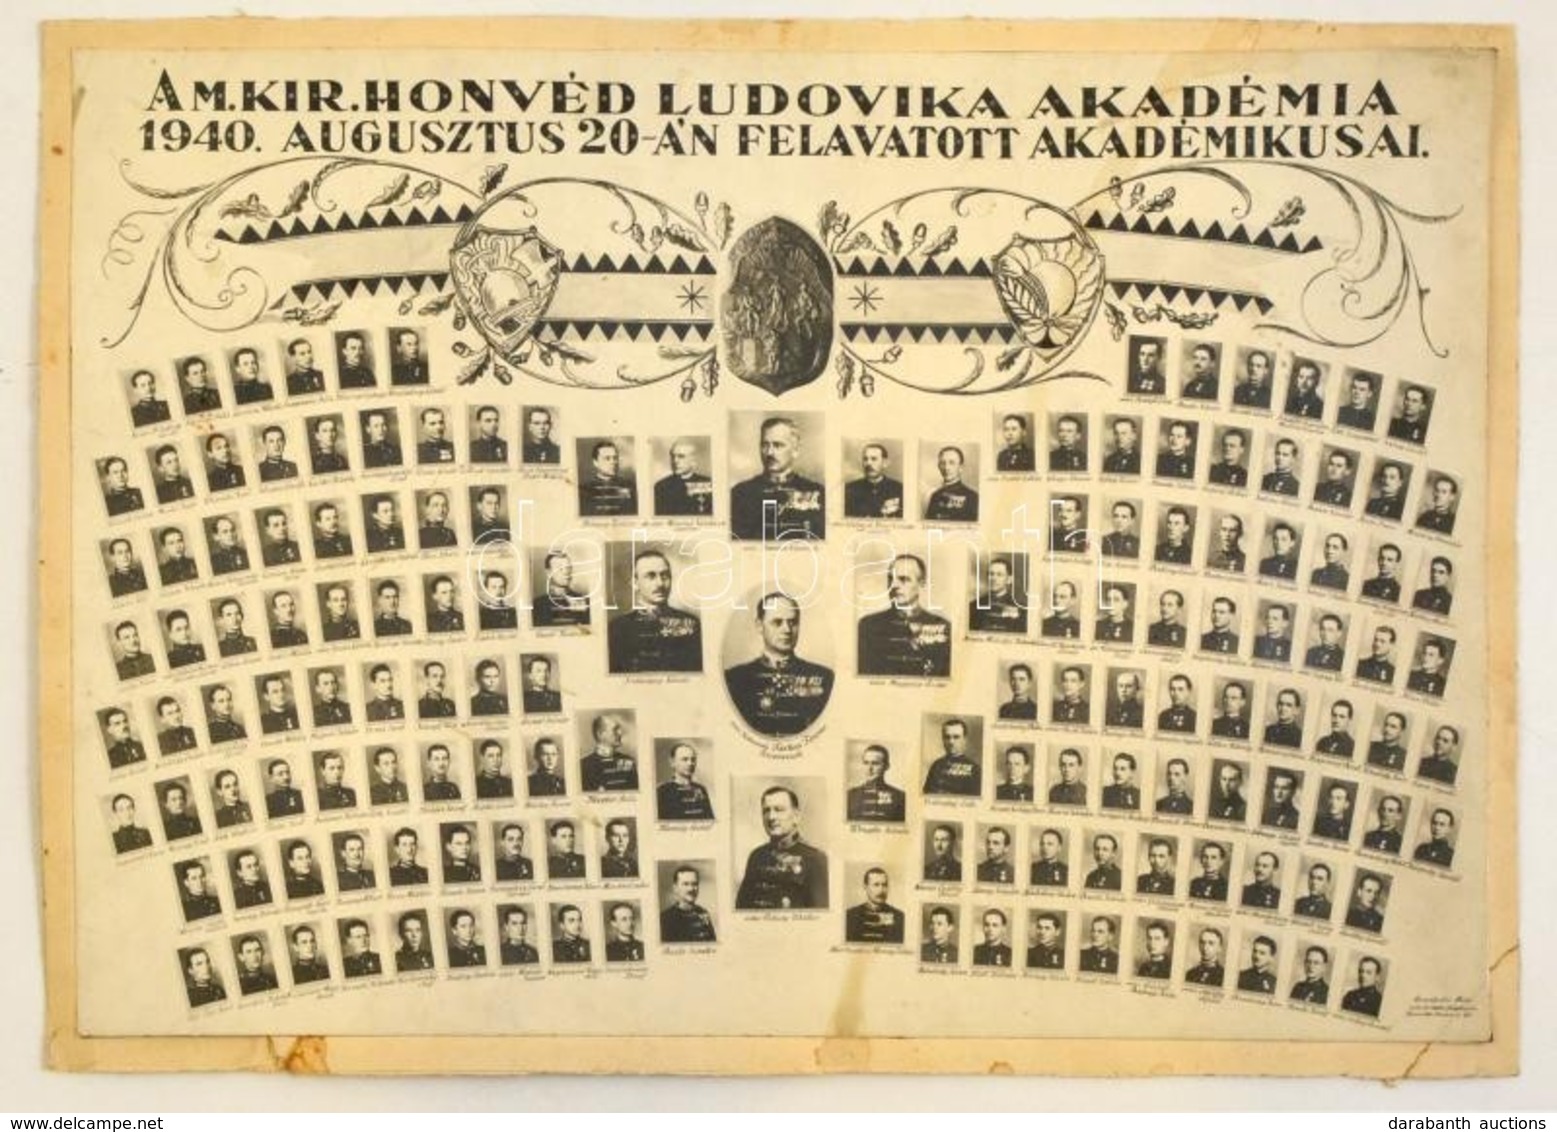 1940 A M. Kir. Ludovika Akadémia 1940. Augusztus 20-án Felavatott Akadémikusai, Tablókép, Brunhuber Béla, Budapest, Kart - Ohne Zuordnung